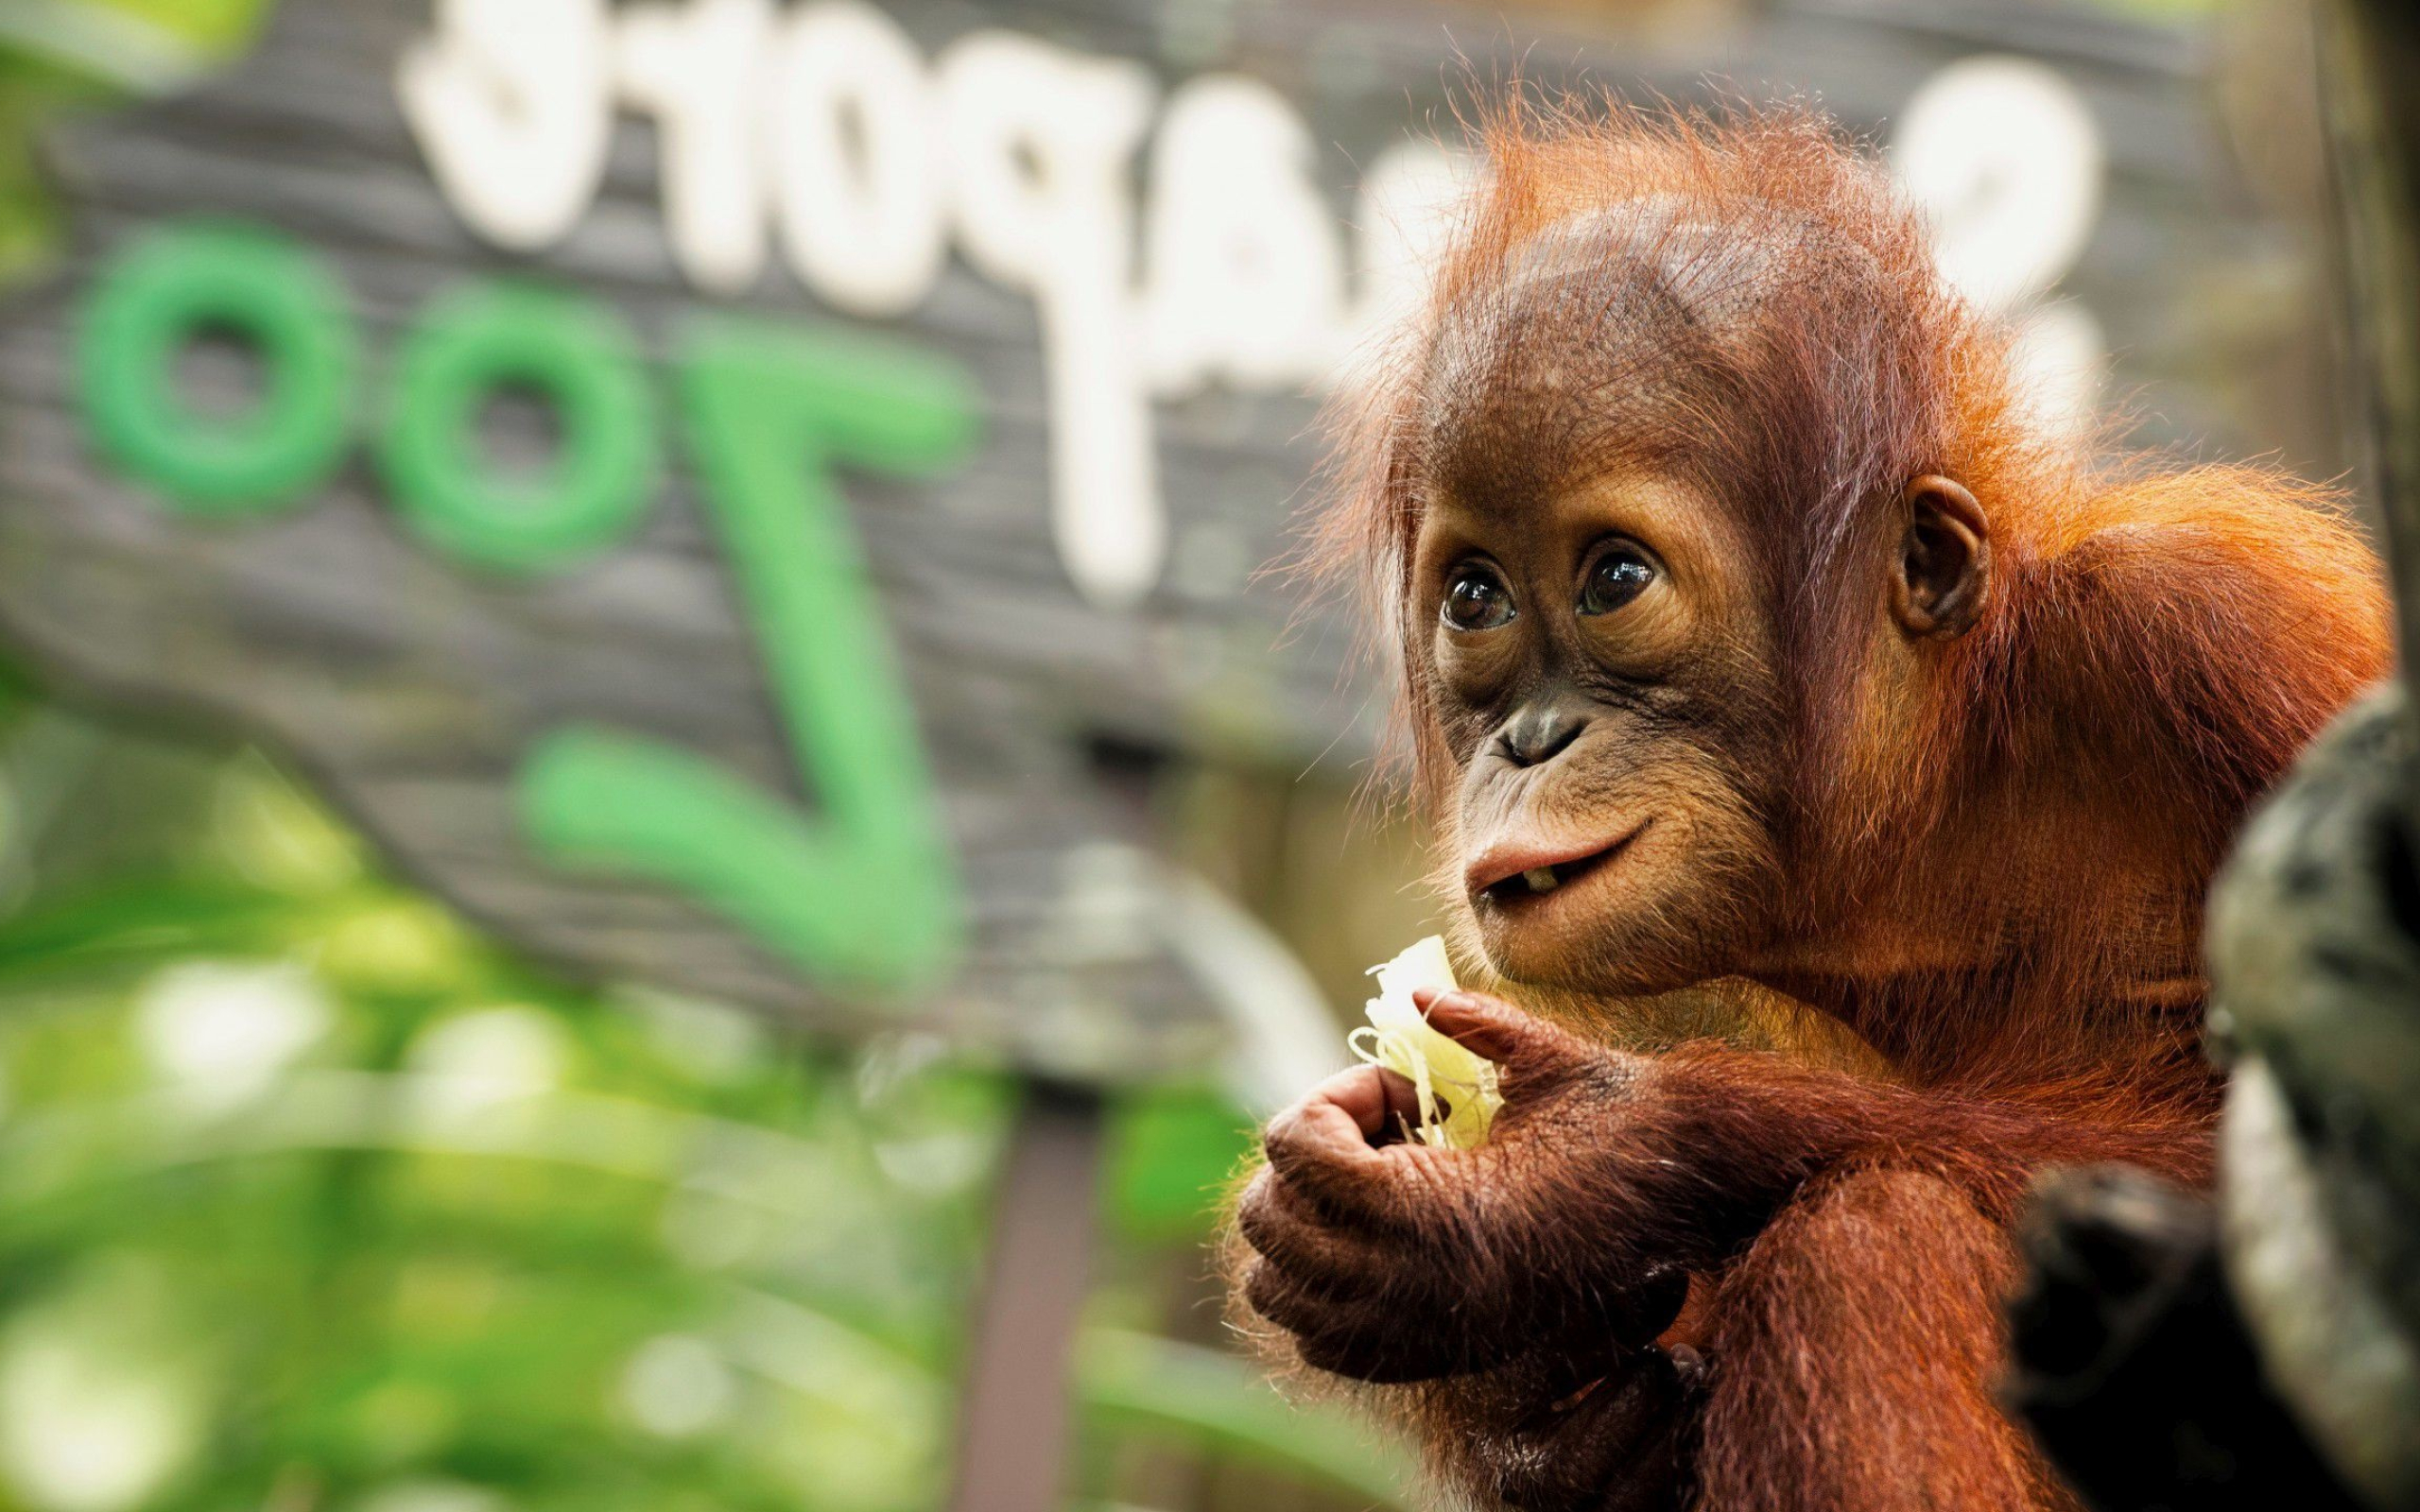 Baby orangutan, Animal wallpapers, Adorable primate, Innocent eyes, 2560x1600 HD Desktop